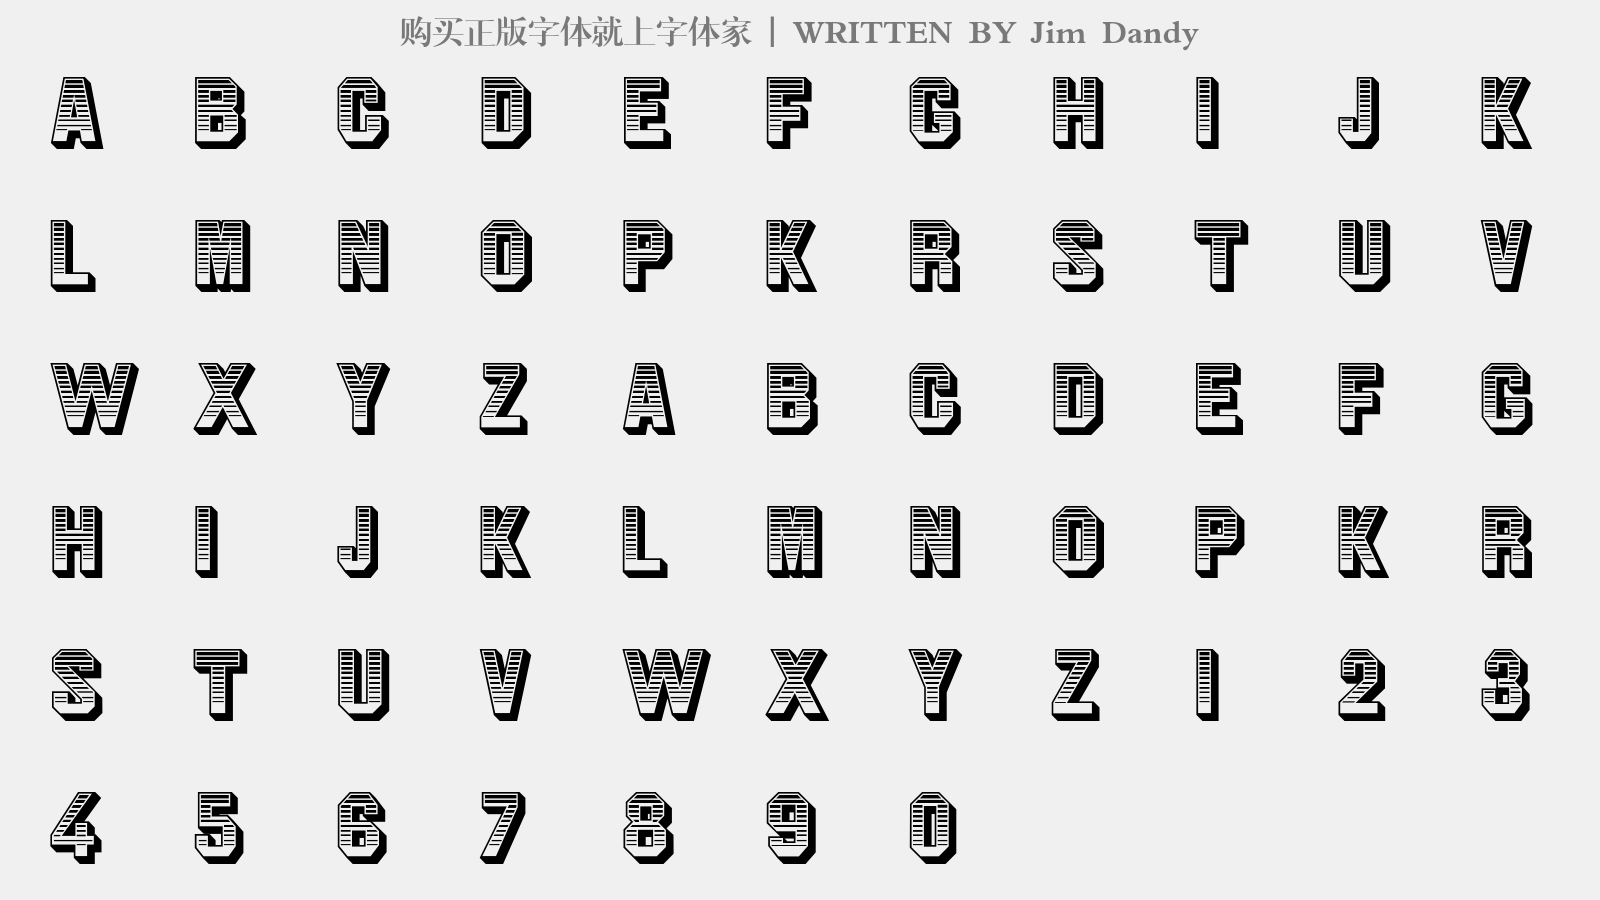 Jim Dandy - 大写字母/小写字母/数字